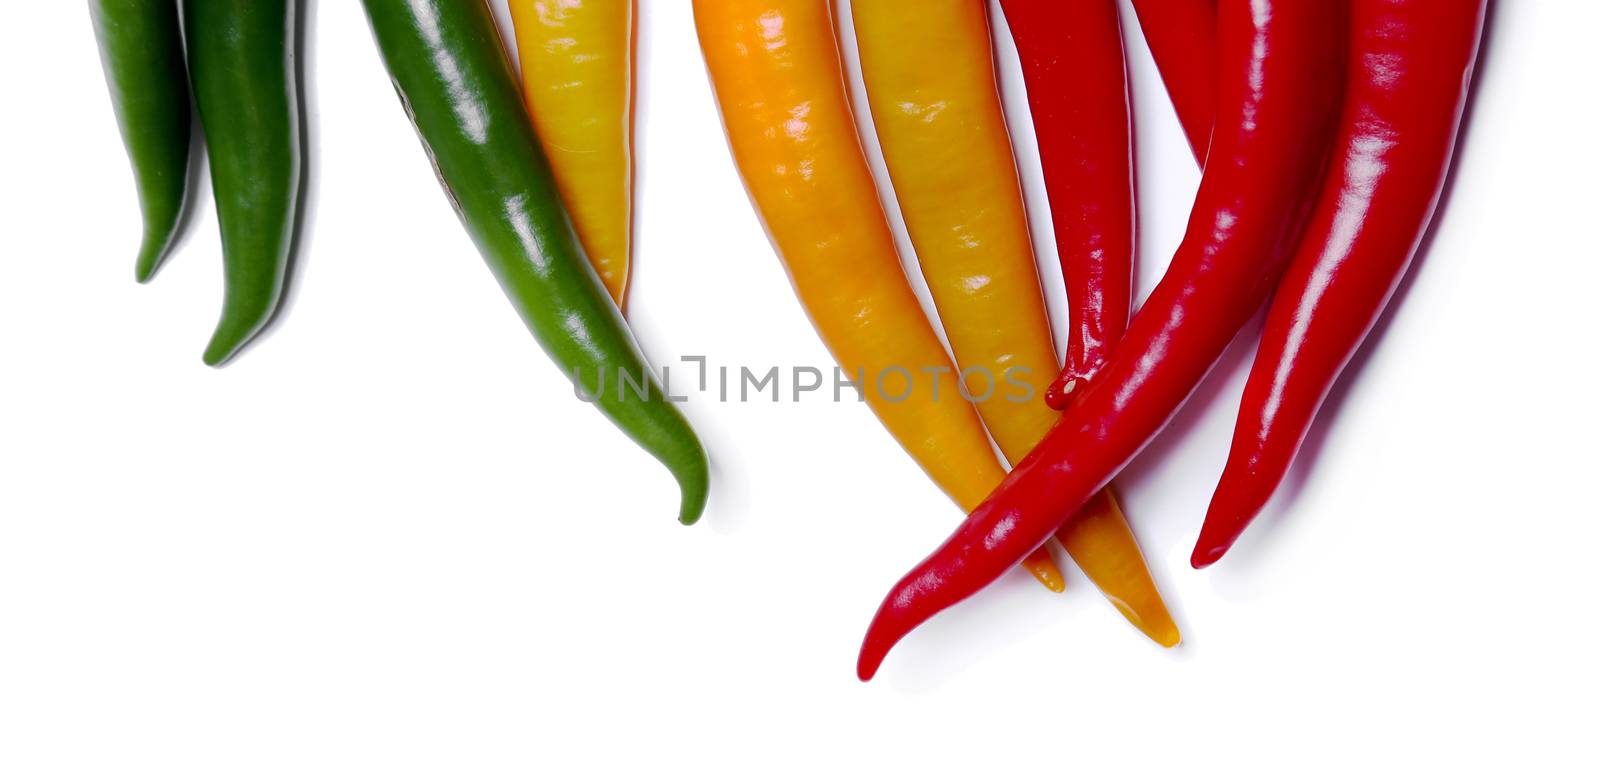 Chili pepper by rufatjumali